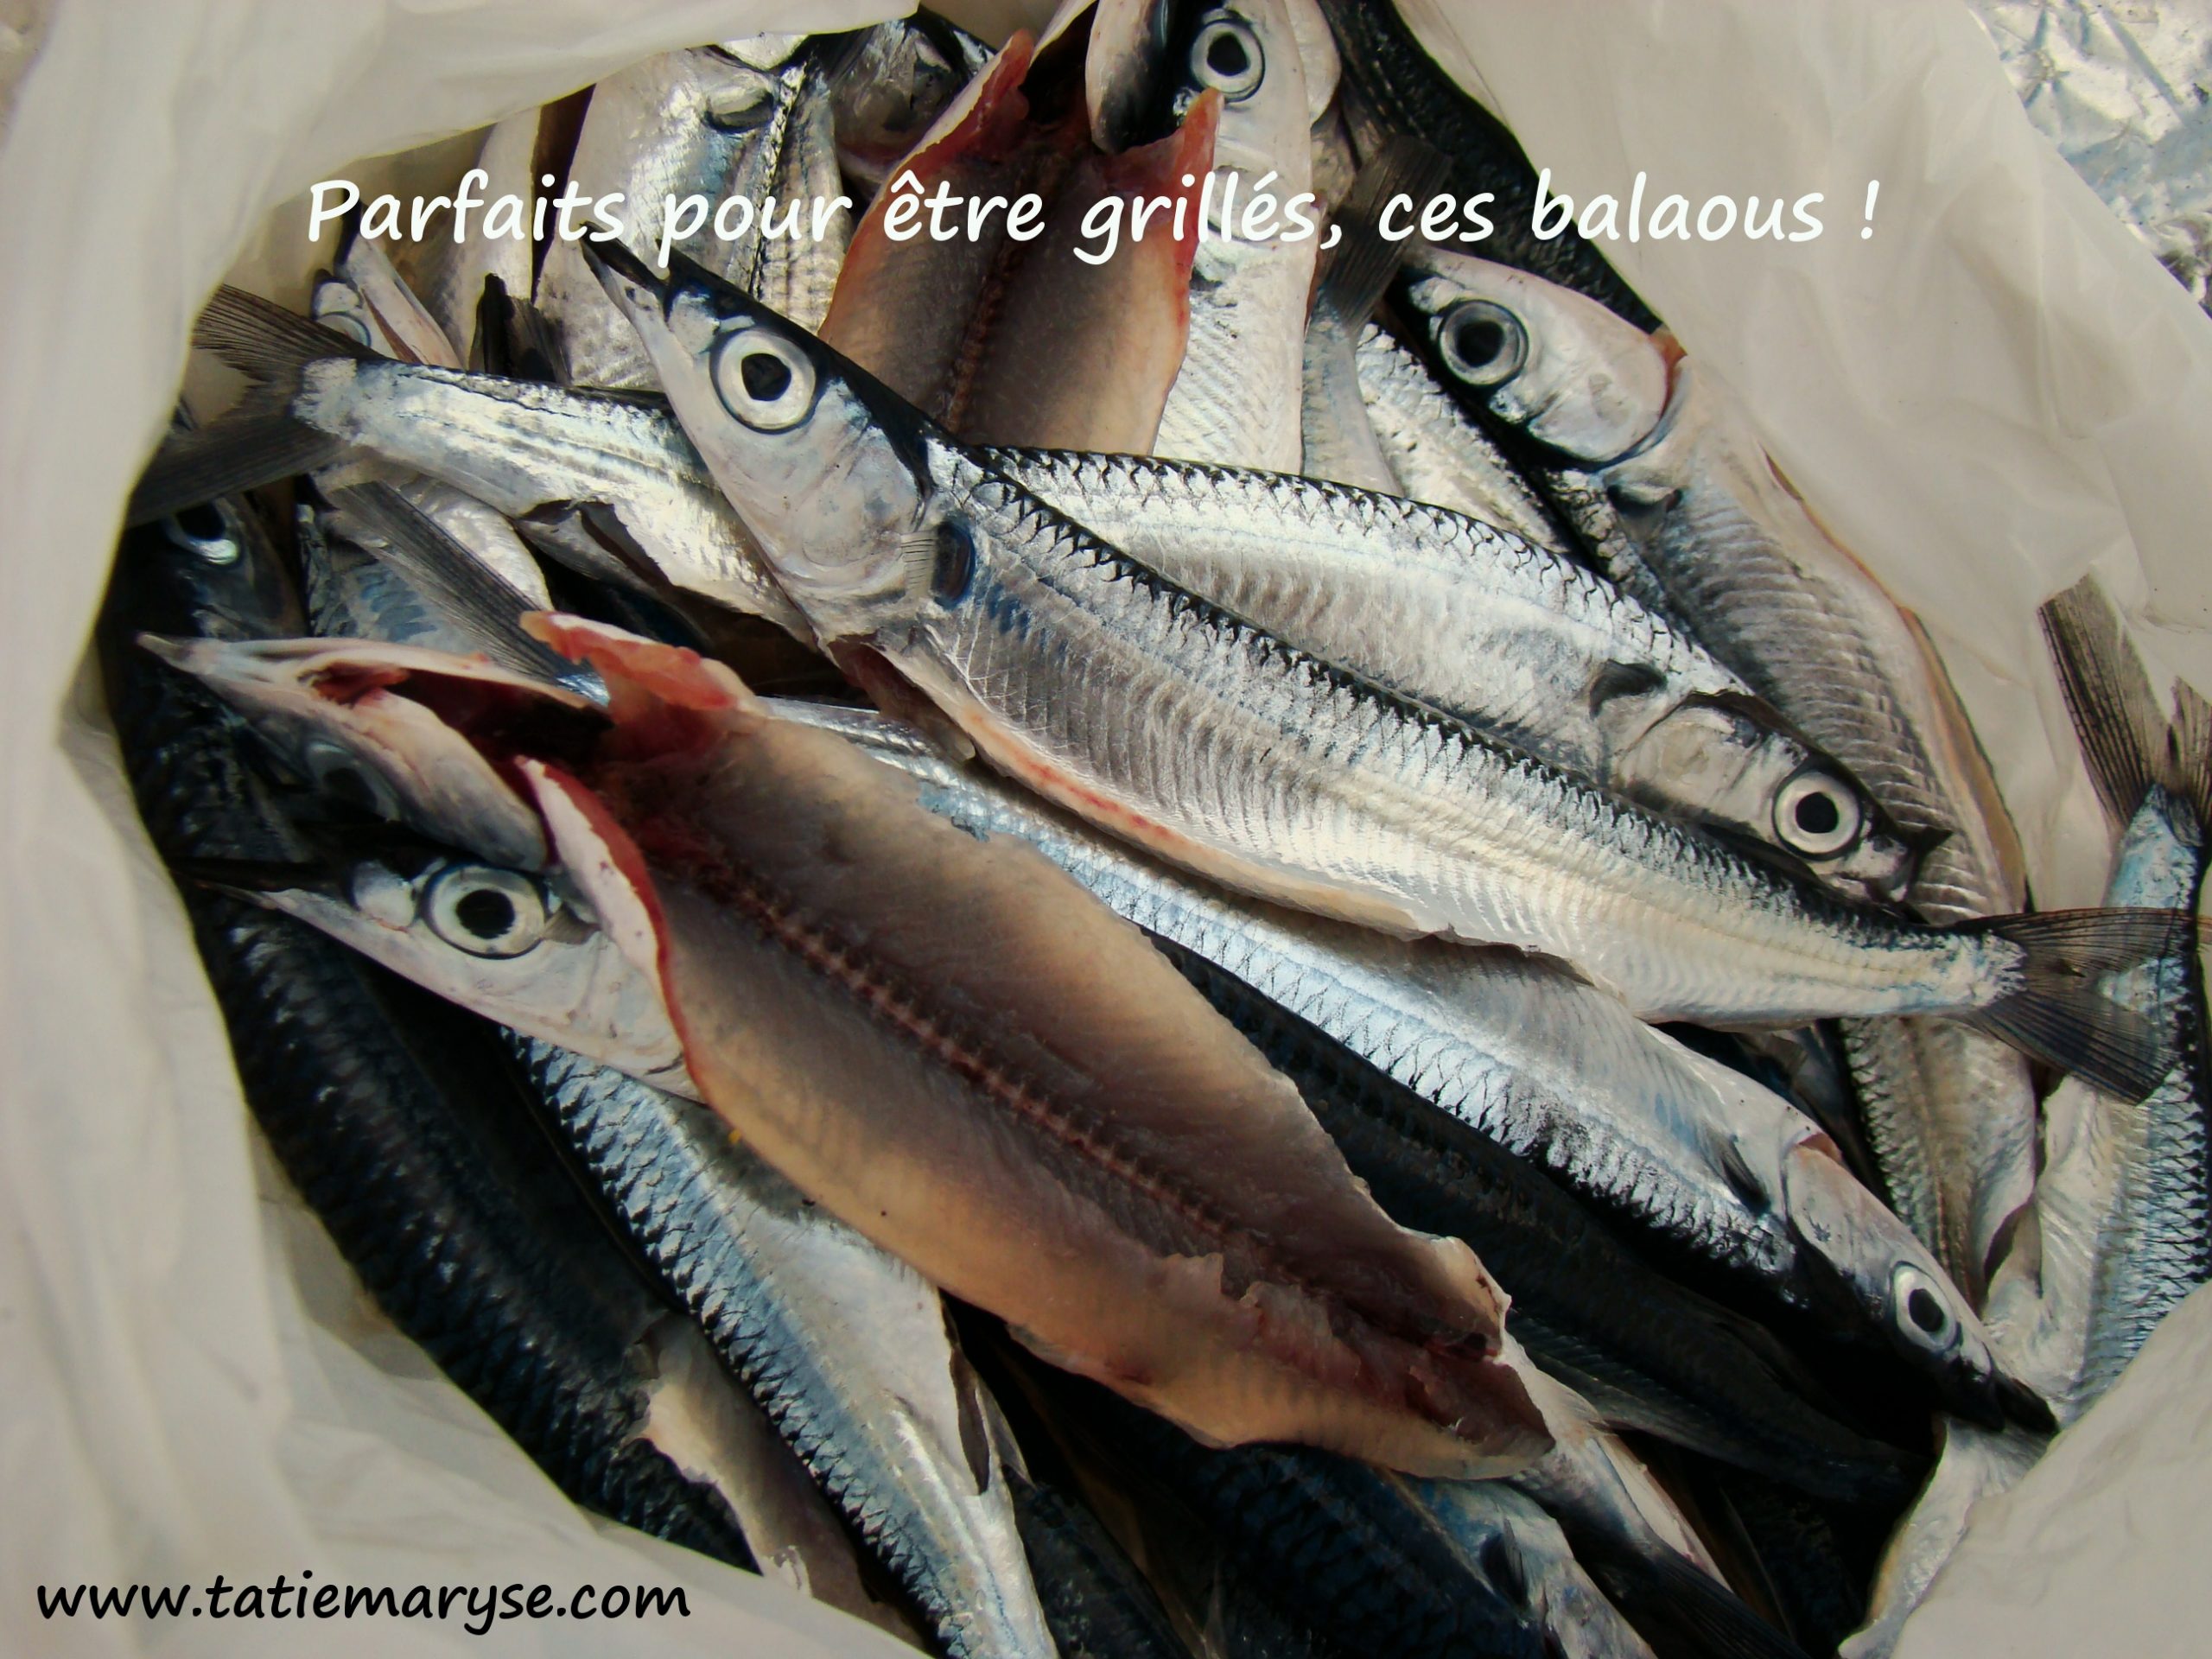 poisson gras antillais balaou Martinique West Indian Balao halfbeak fish fatty oily fish